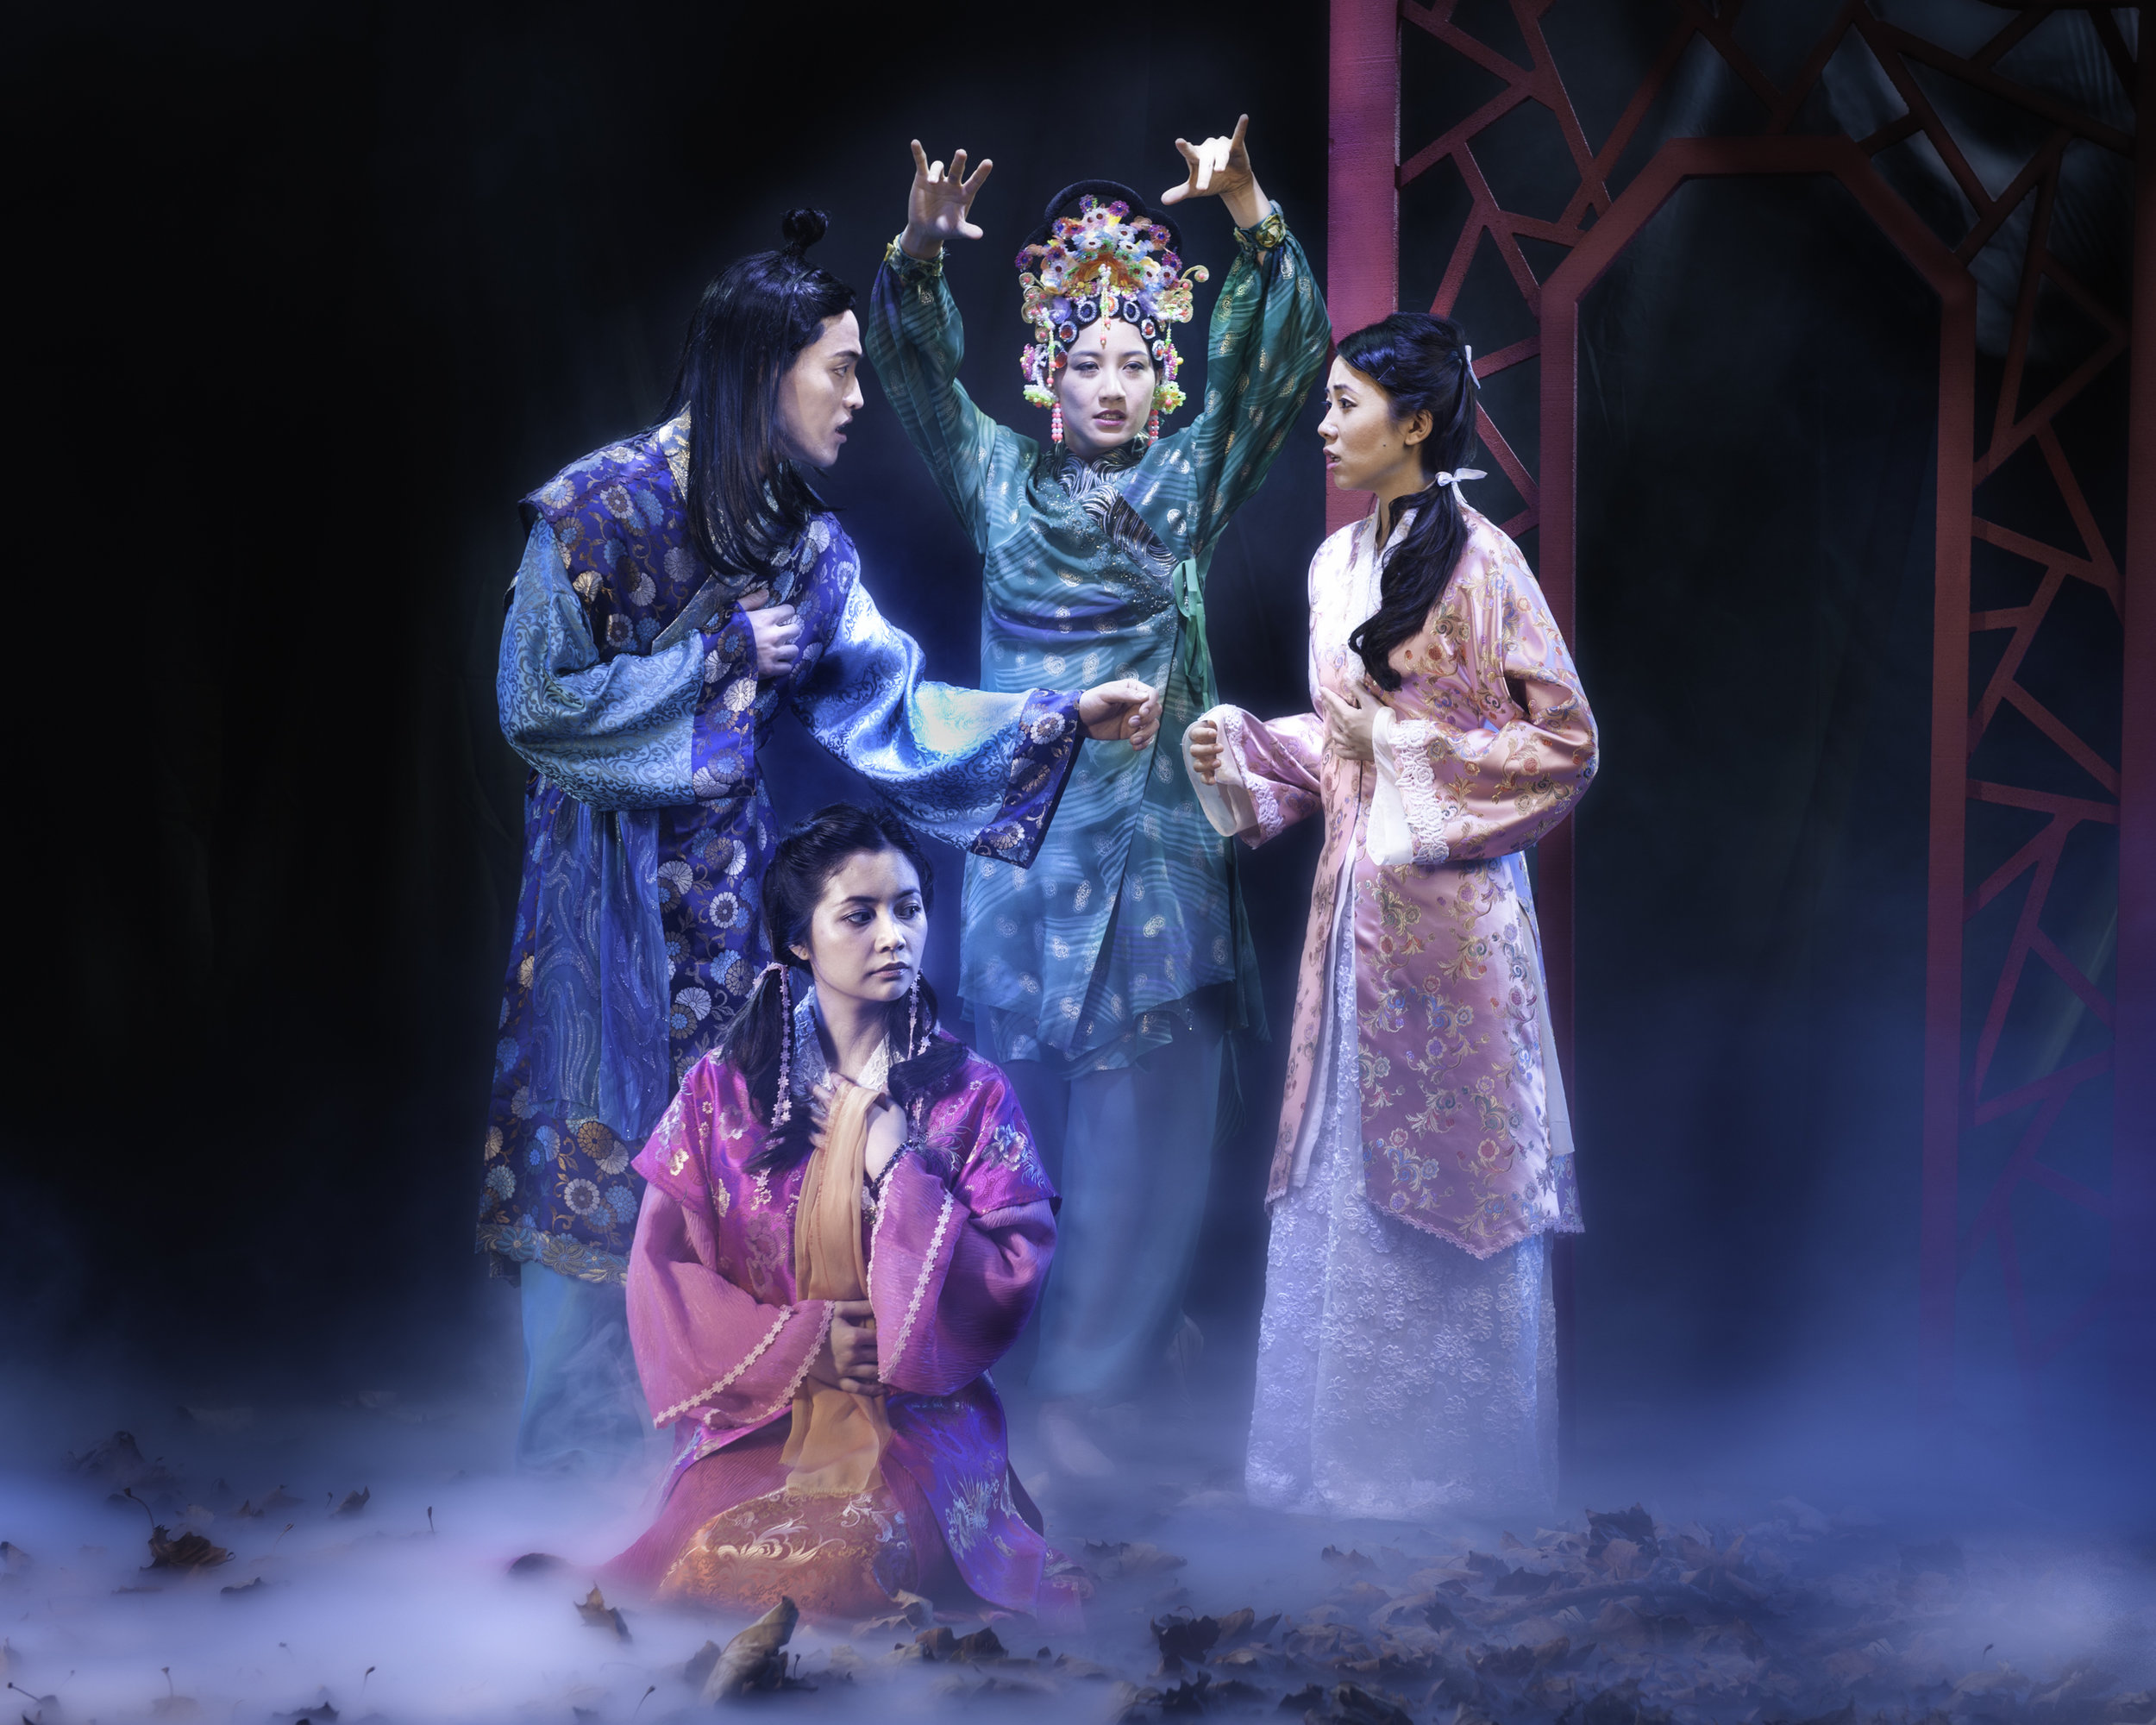 Vichet Chum, Leanne Cabrera, Mandarin Wu and Kelsey Wang in Pan Asian Rep's A DREAM OF RED PAVILIONS photo by Michael Blase PRINT.jpg